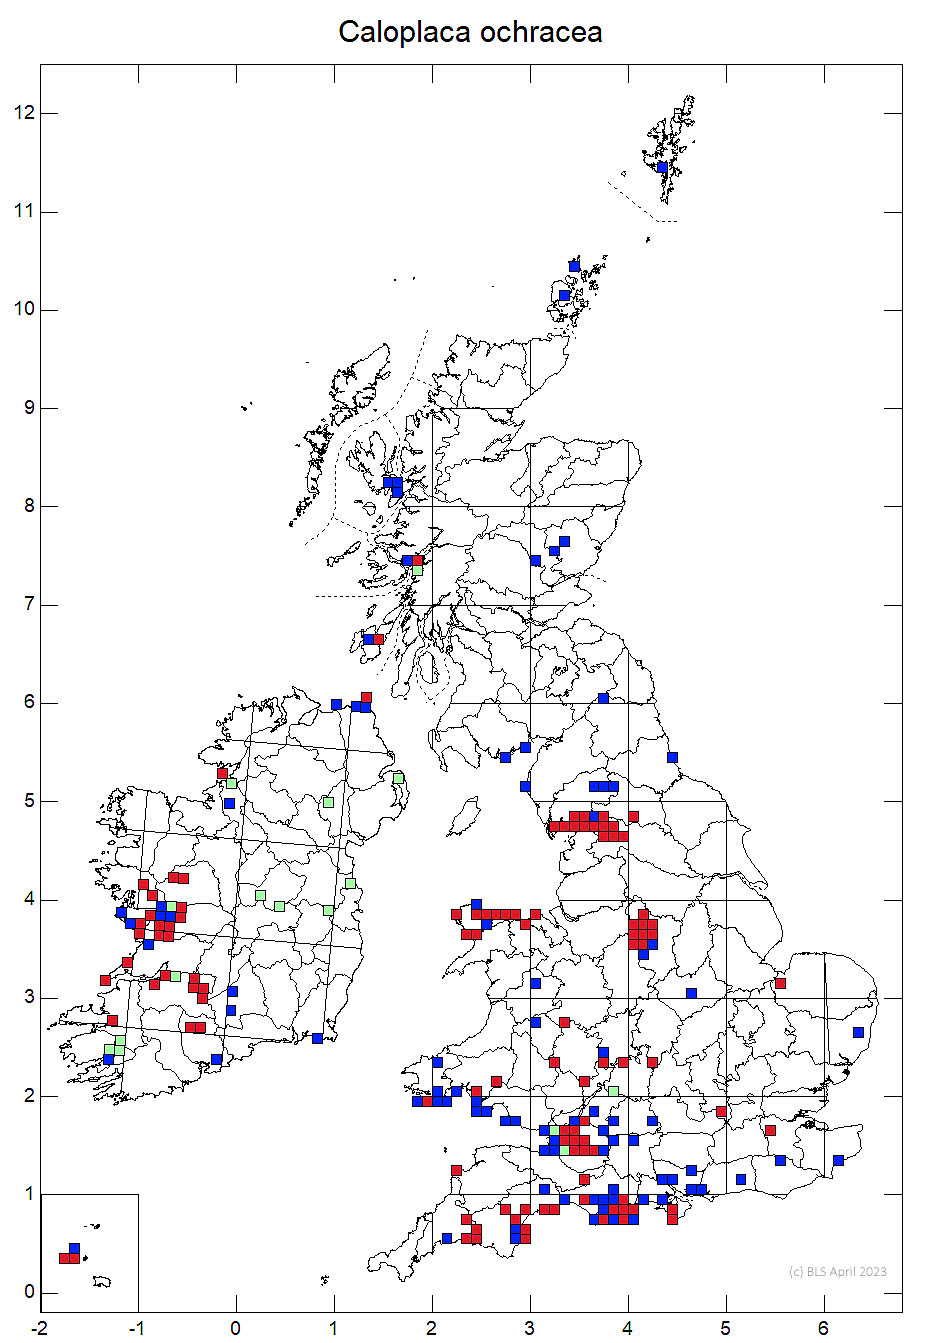 Caloplaca ochracea 10km sq distribution map